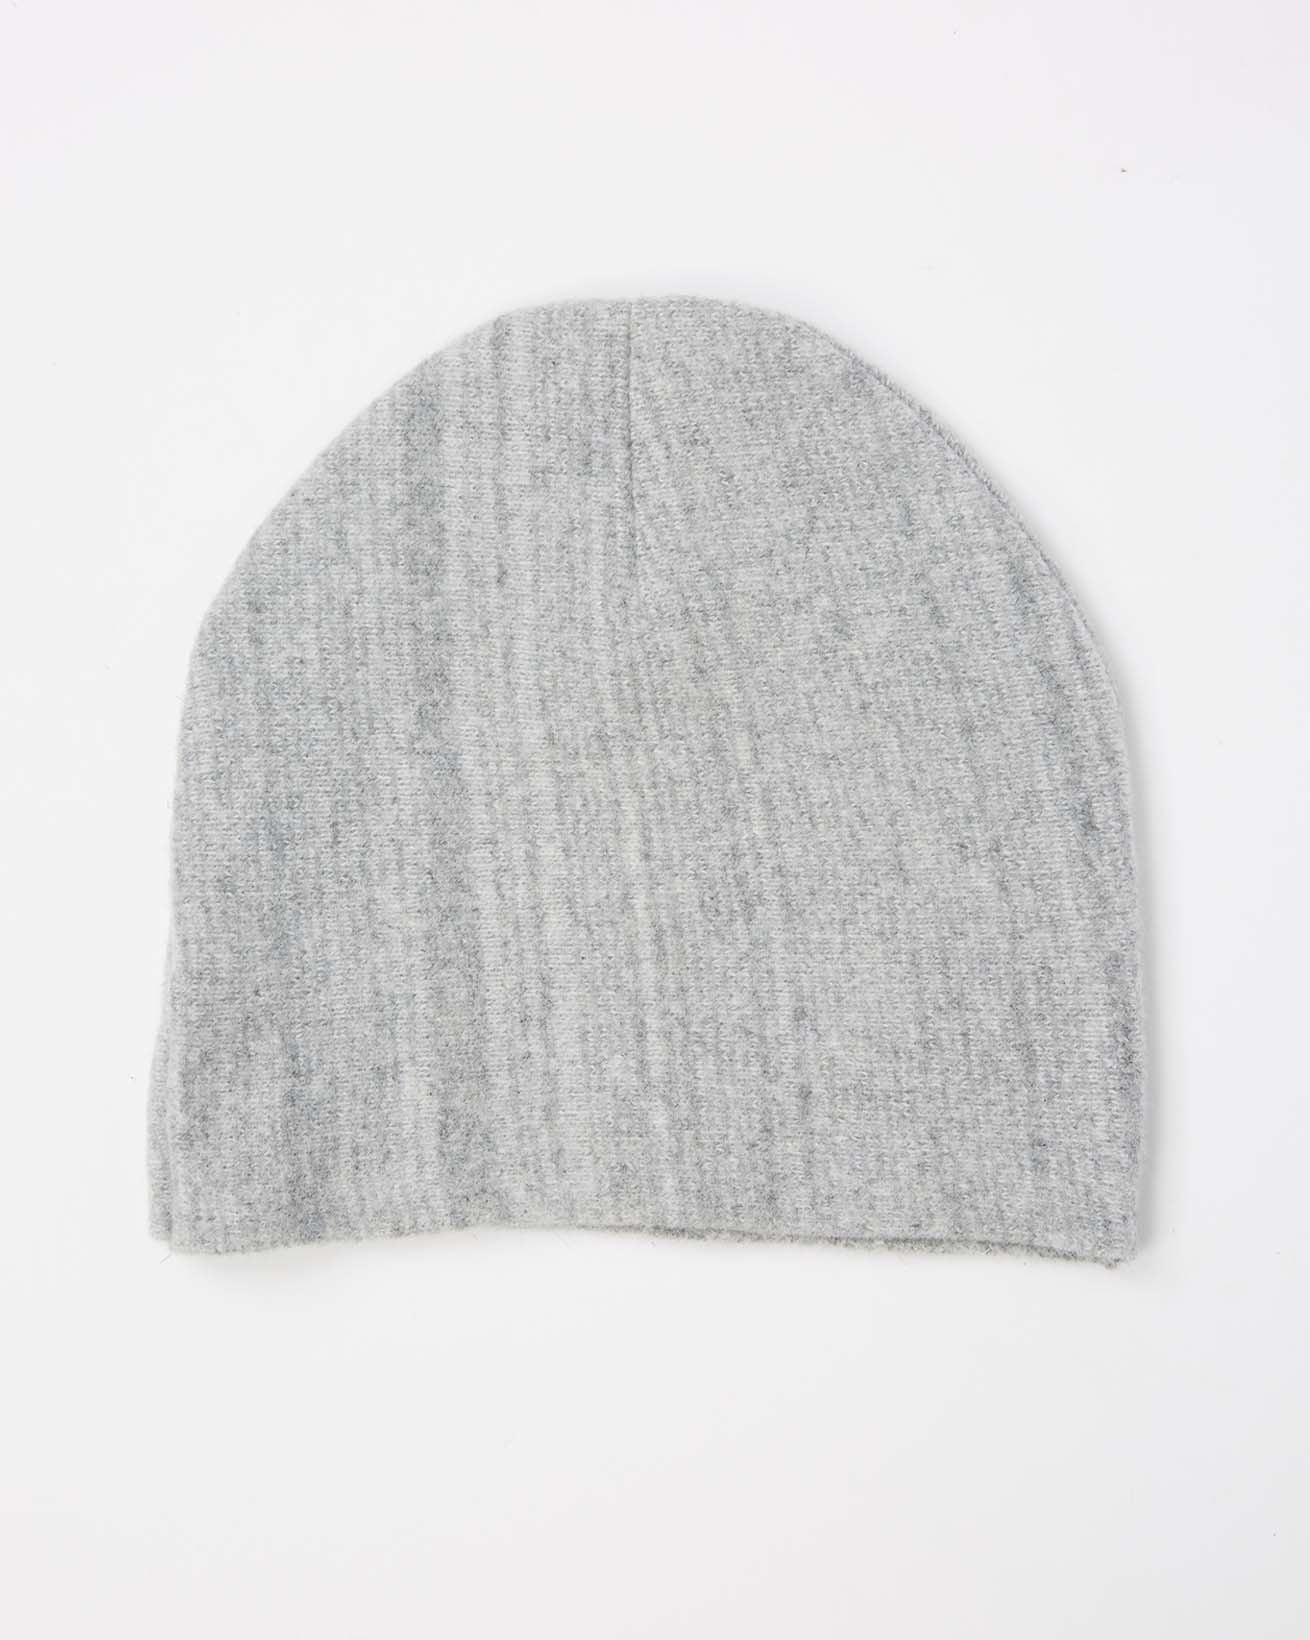 Ladder Stitch Hat / Soft Grey / One Size